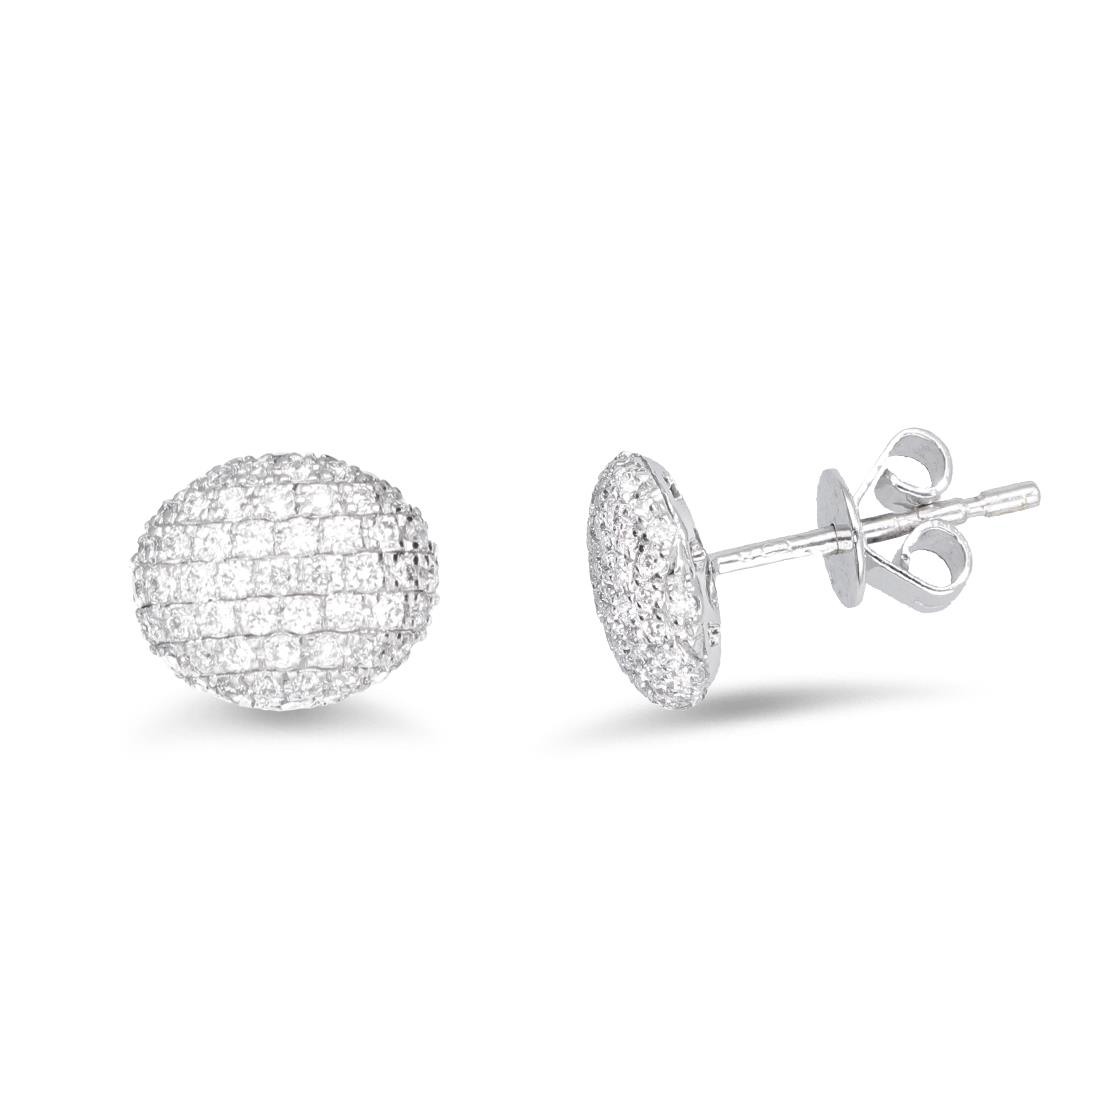 White gold earrings with diamonds ct. 0.35 - ALFIERI & ST. JOHN